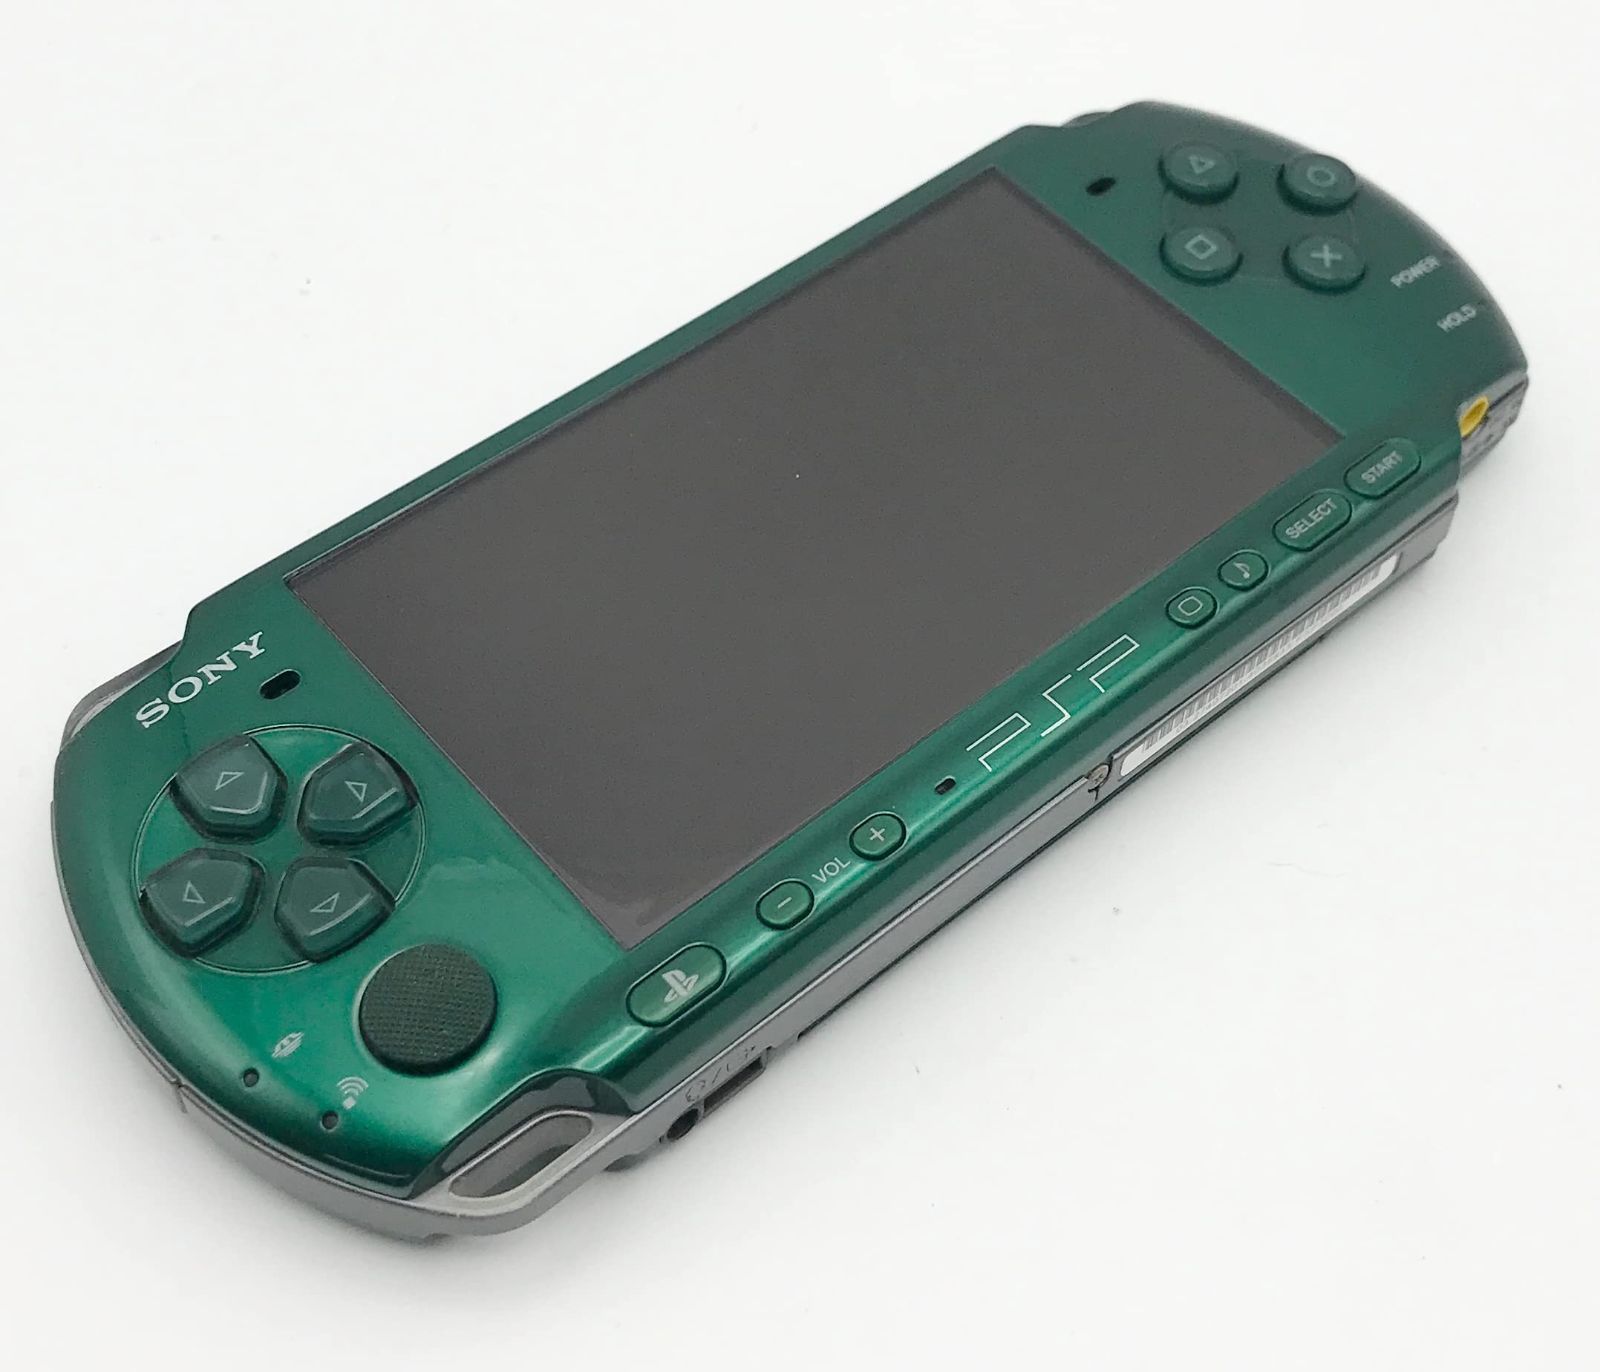 PSP3000 バリューパック レッド ブラック (ソフト ペルソナ3) - 携帯用 